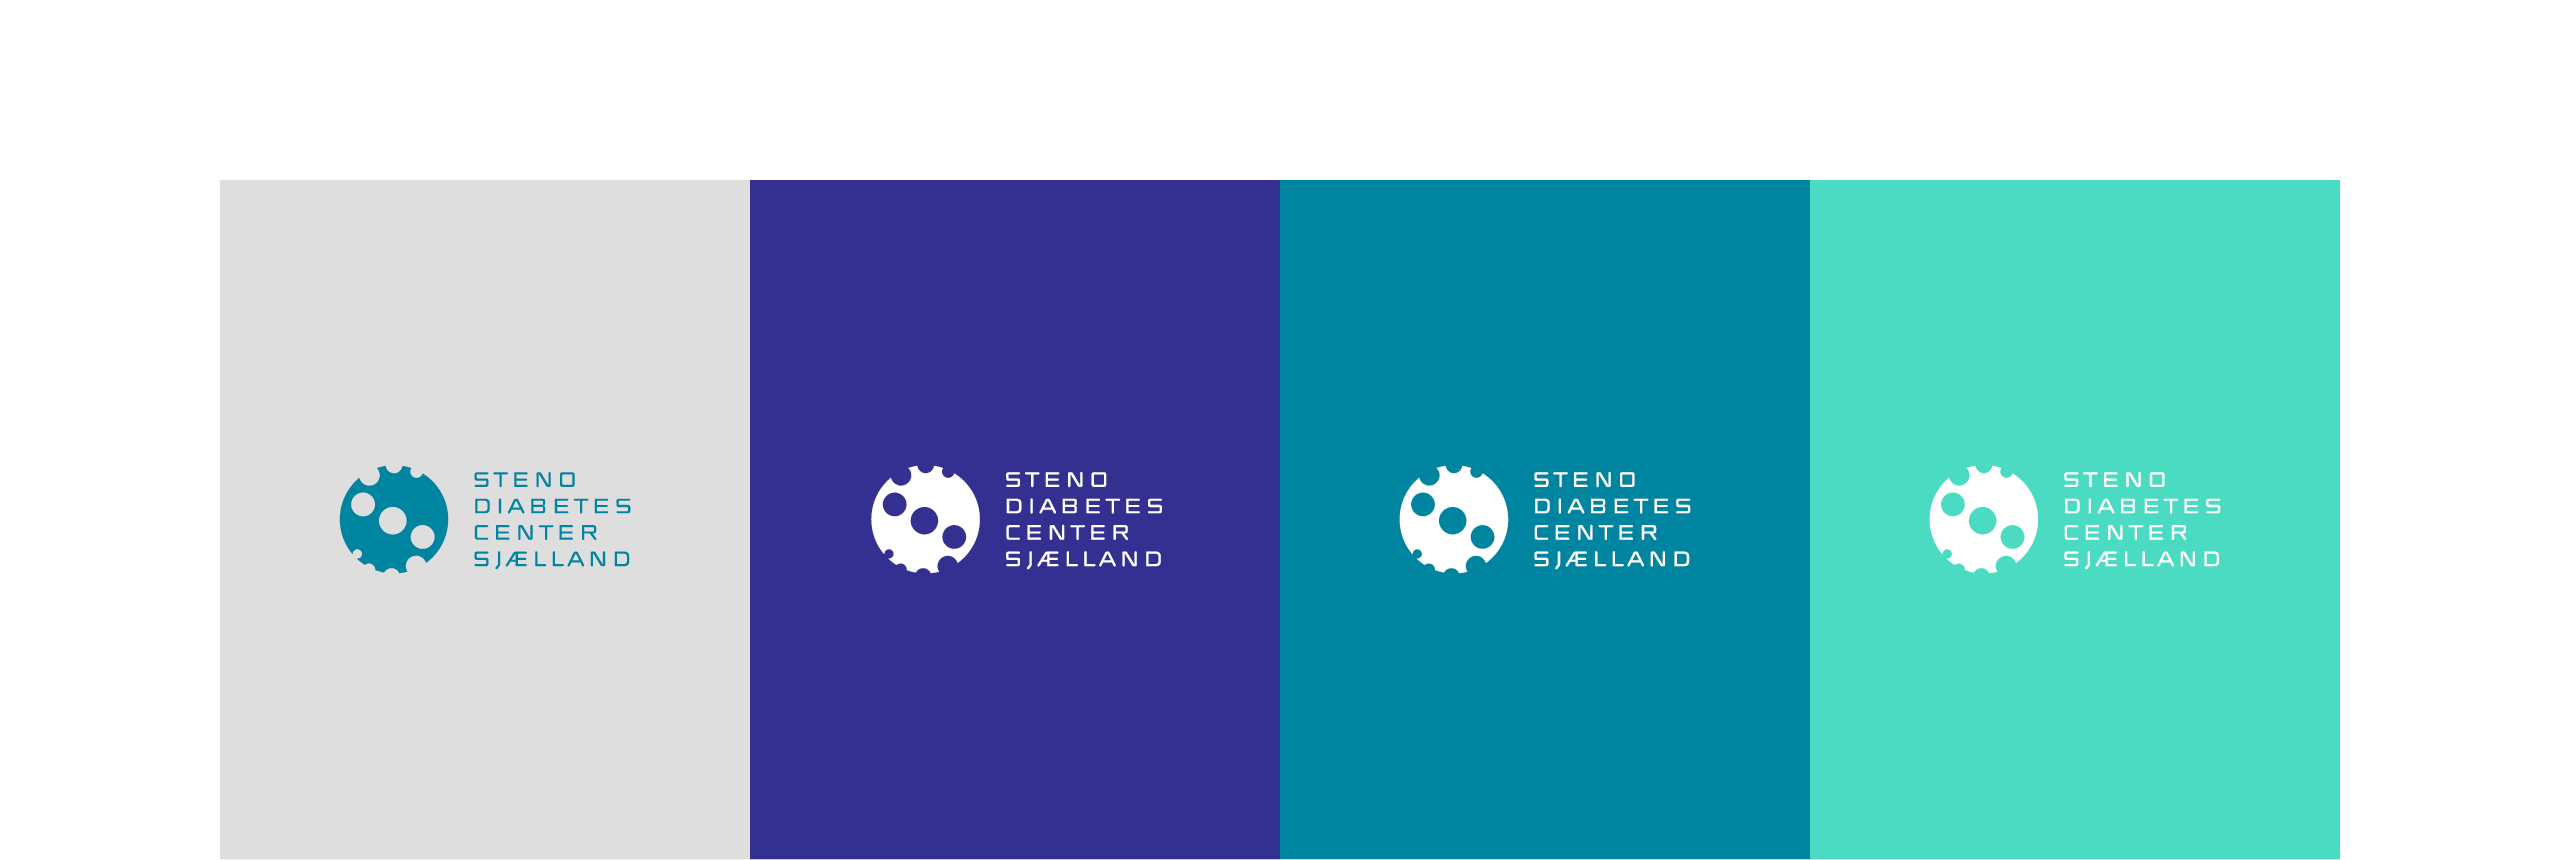 Steno Diabetes Center logo